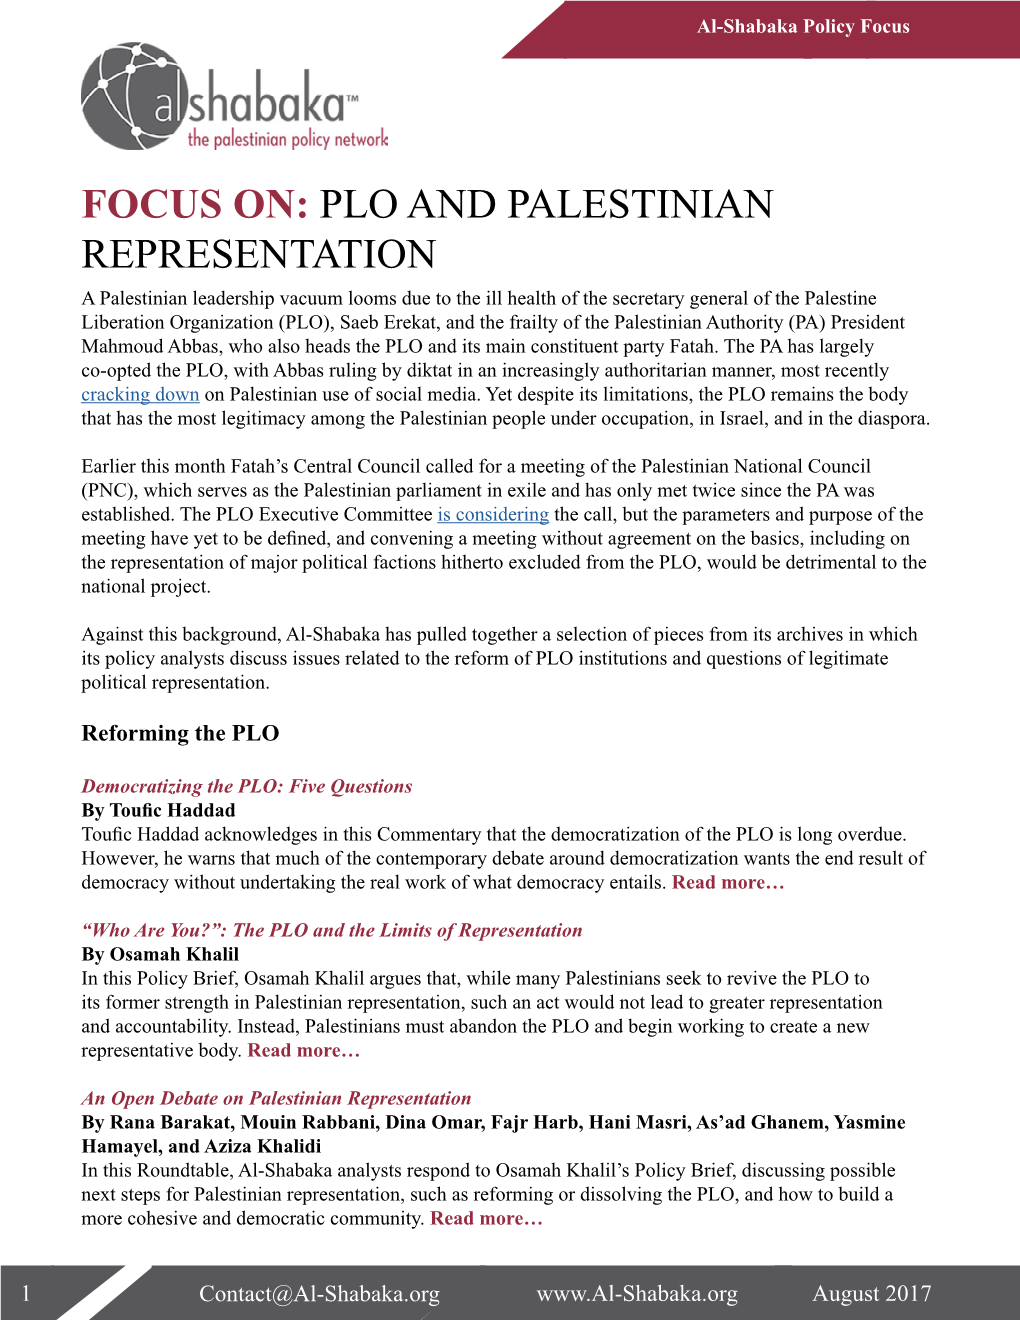 Plo and Palestinian Representation